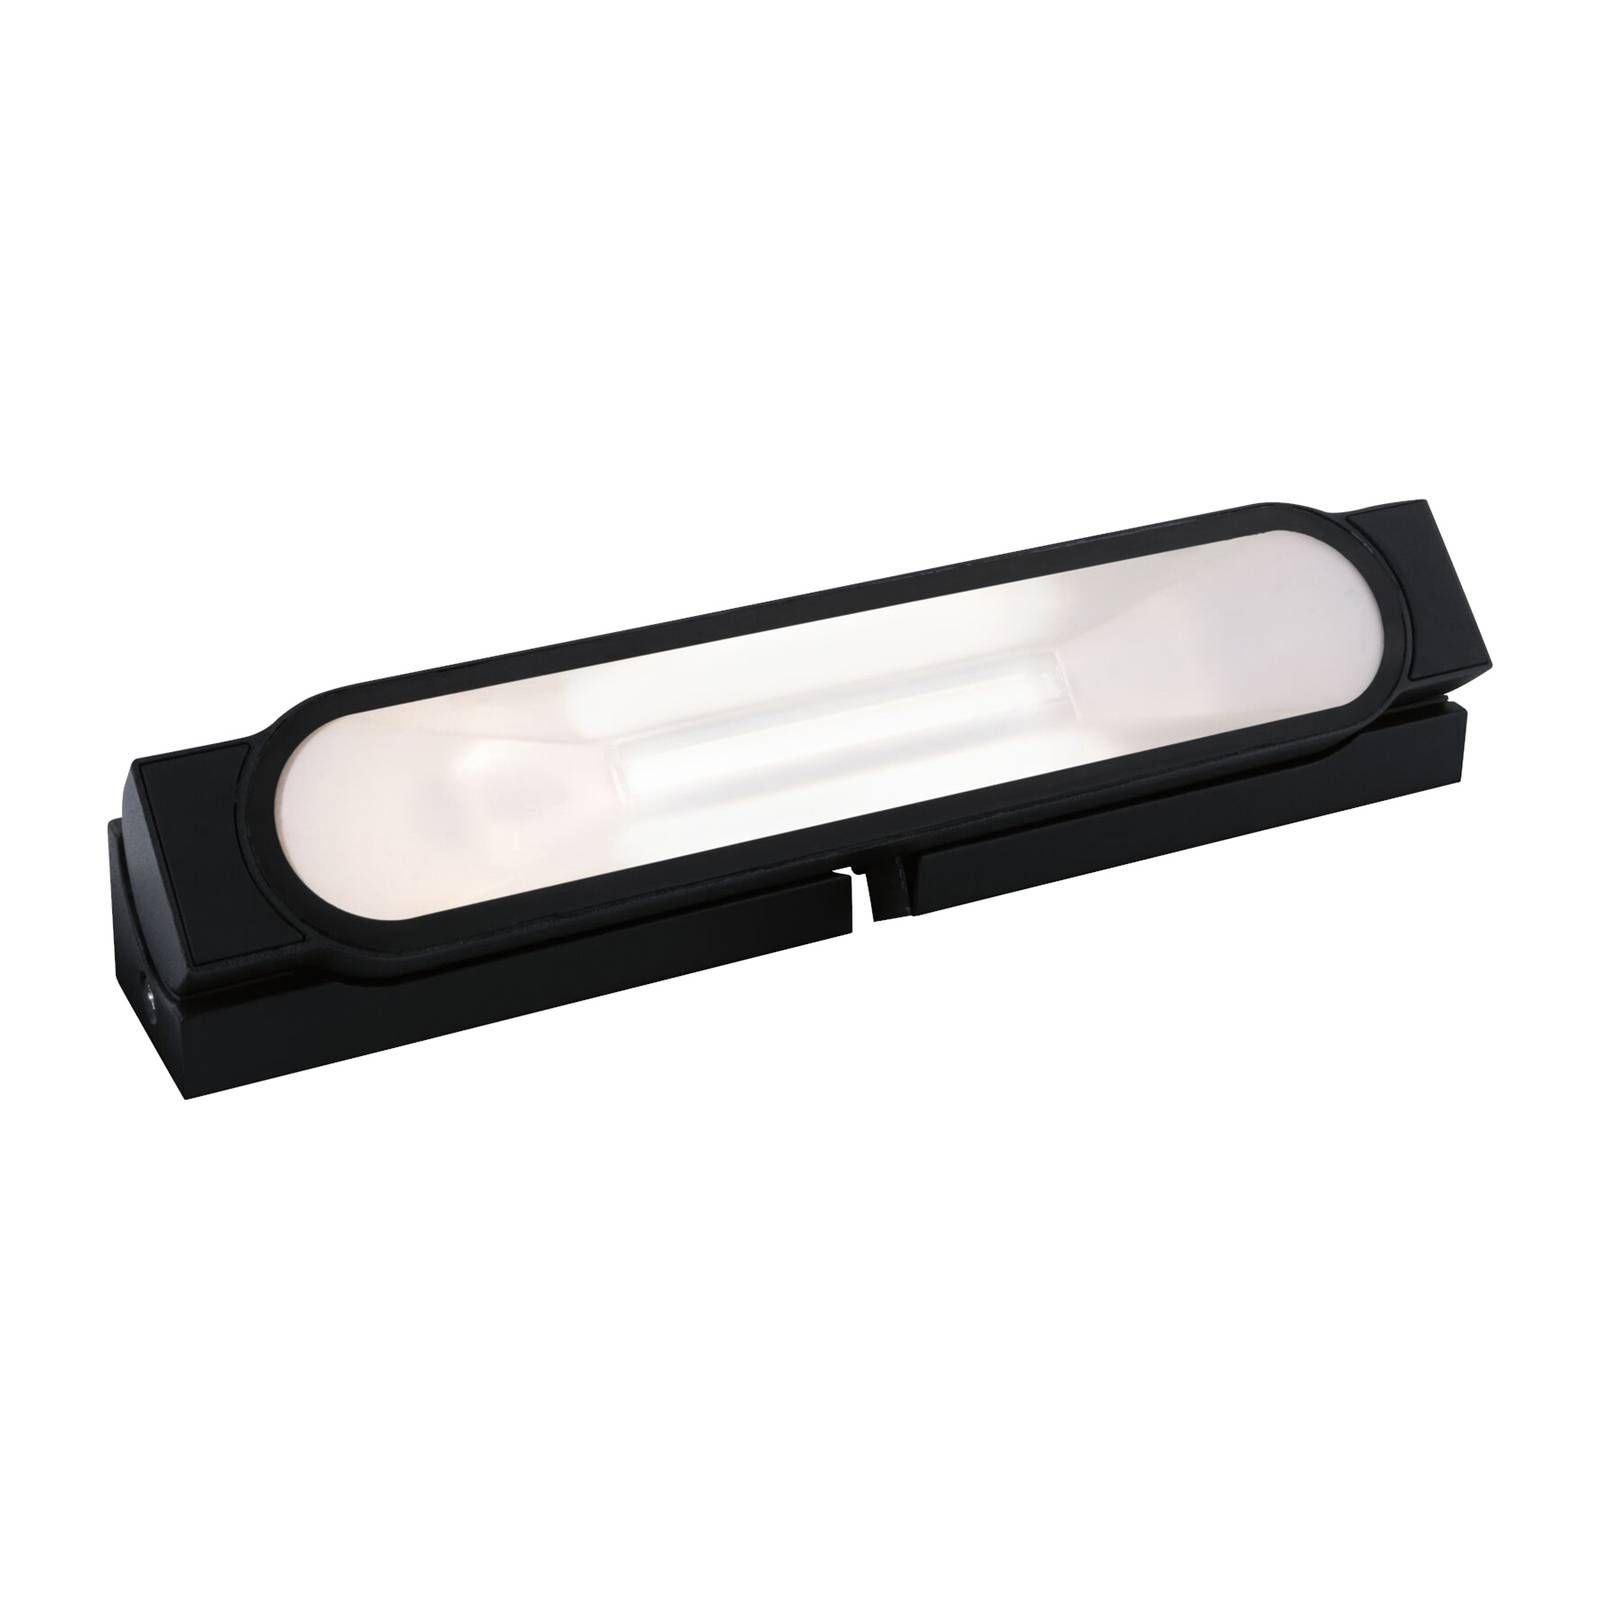 Paulmann Tidos LED wallwasher, inštalácia na zem, kov, 6W, L: 25.2 cm, K: 22.4cm